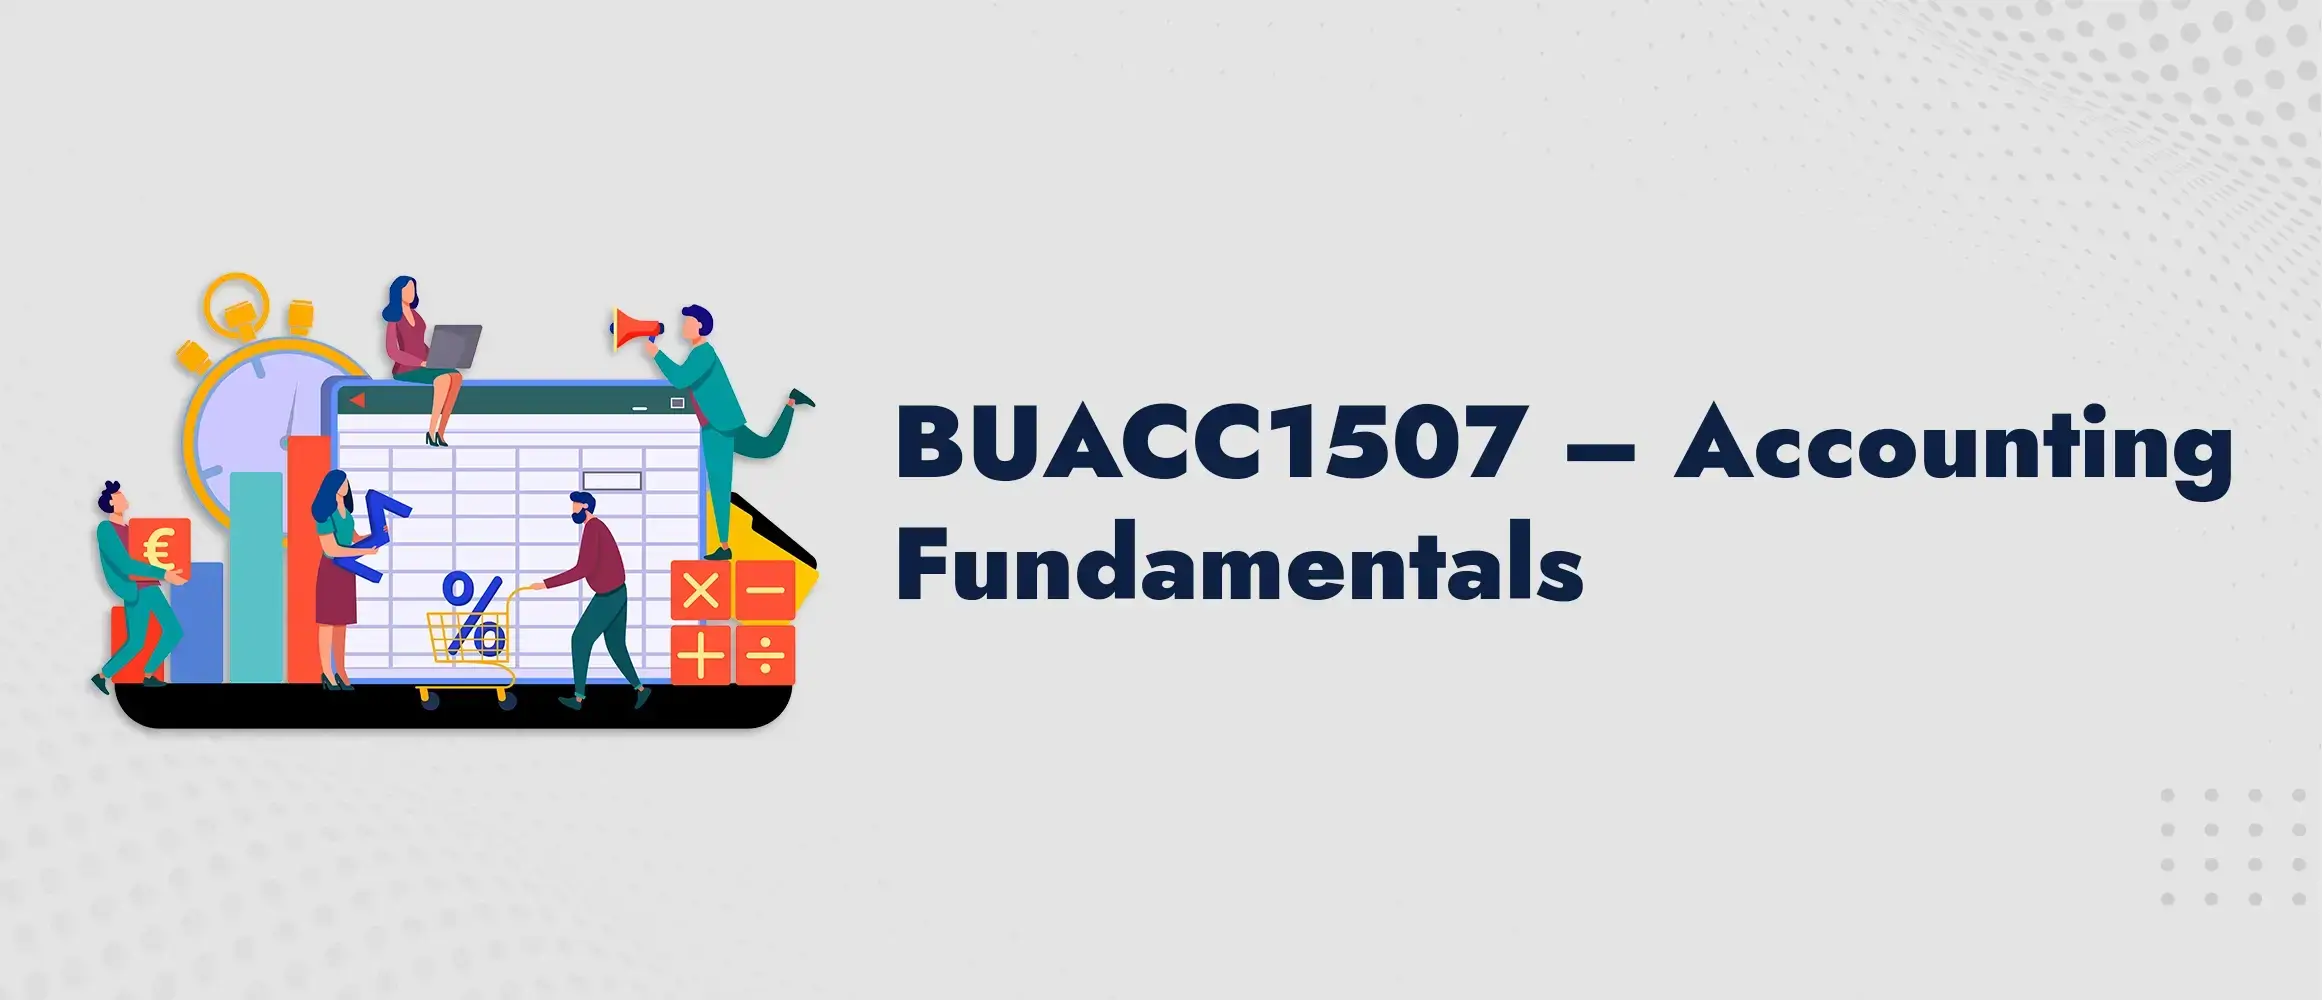 BUACC1507 Accounting Fundamentals